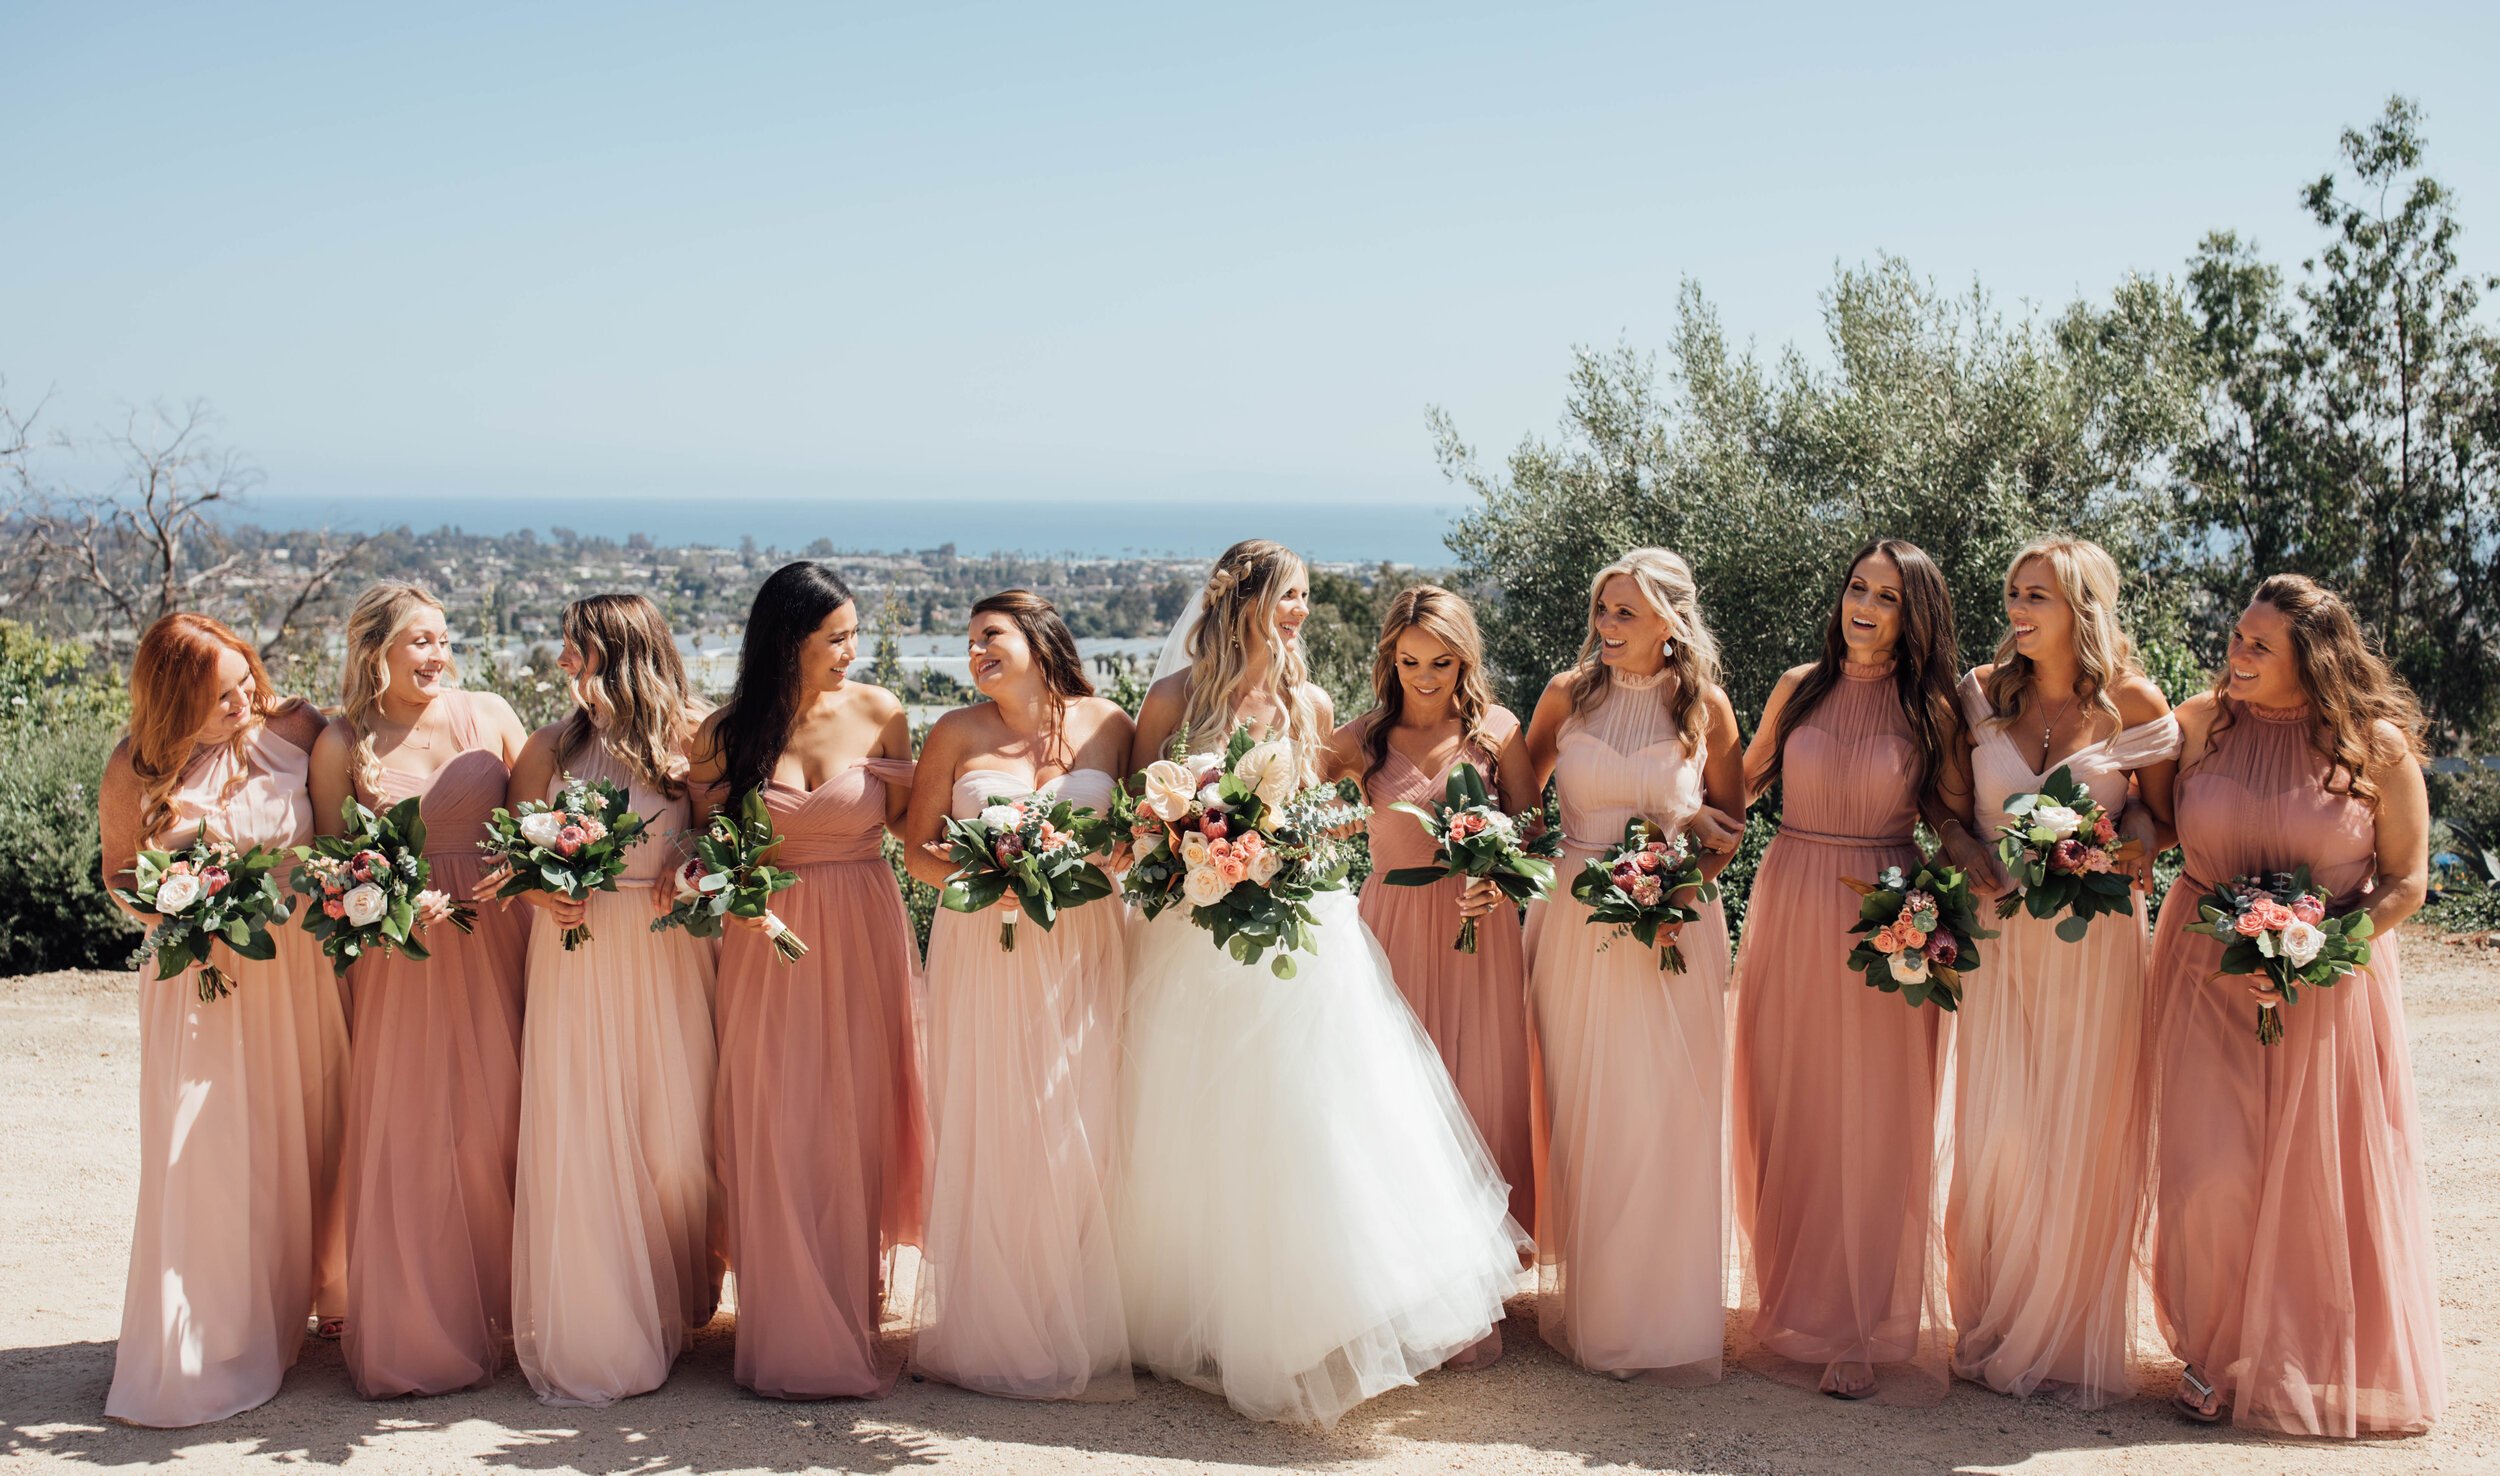 www.santabarbarawedding.com | Bria Peterson | Ocean View Farm | KB Events | Tangled Lotus | Nicquel | Bride with Bridesmaids and Bouquets